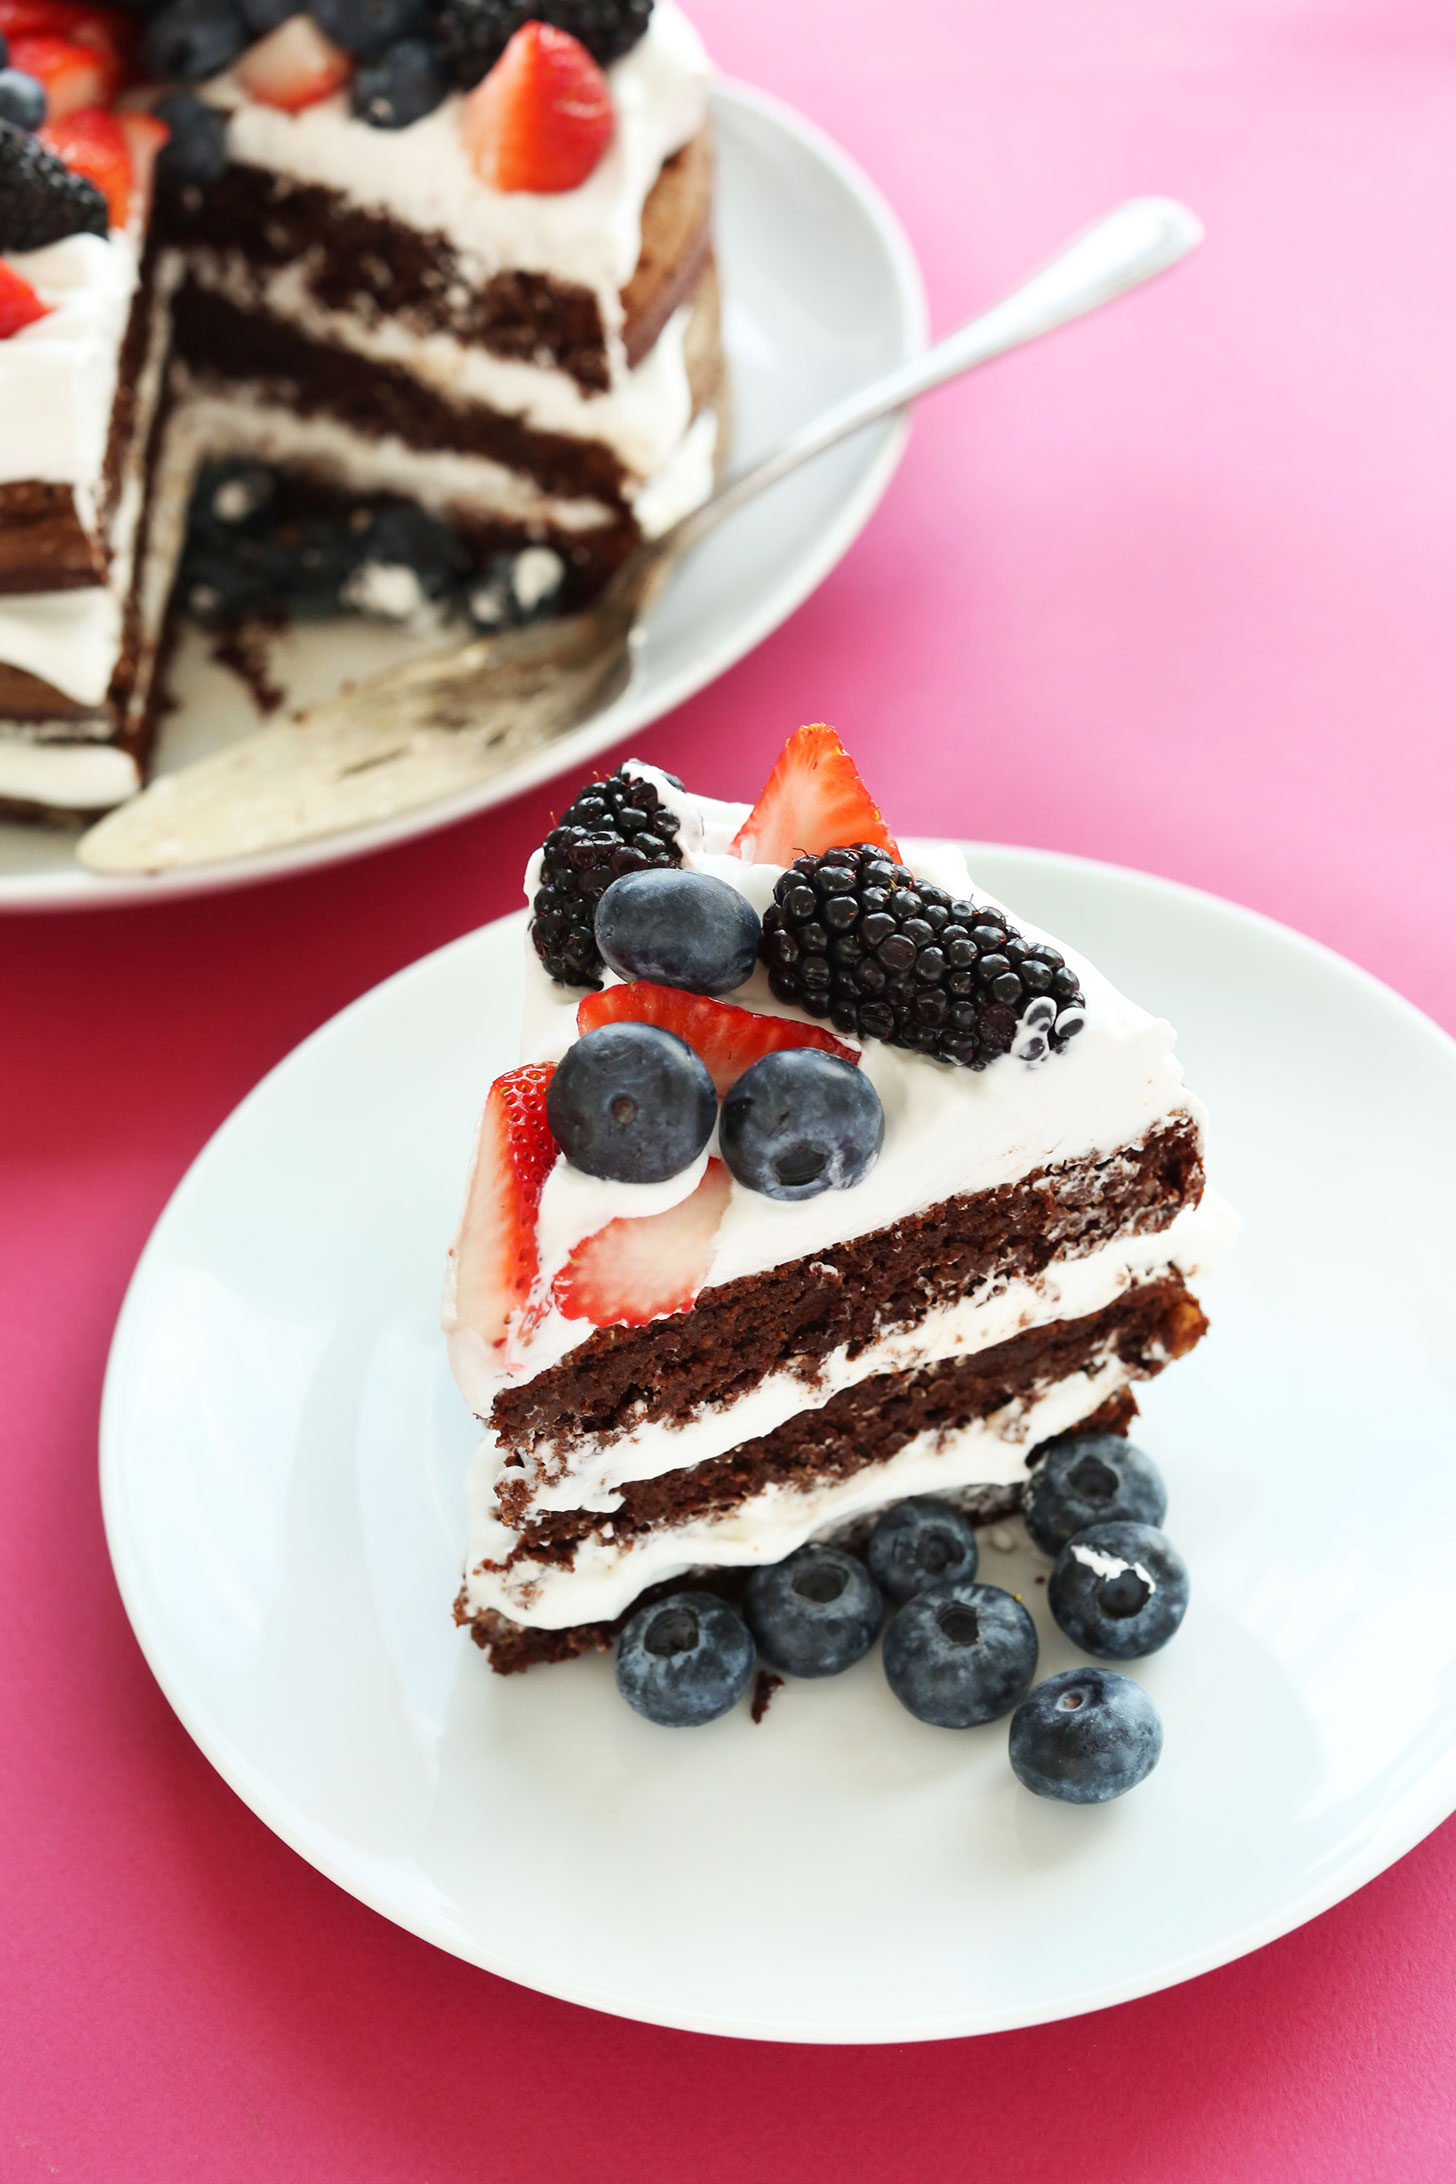 Slice of gluten-free vegan Chocolate Cake with Coconut Whipped Cream and fresh berries